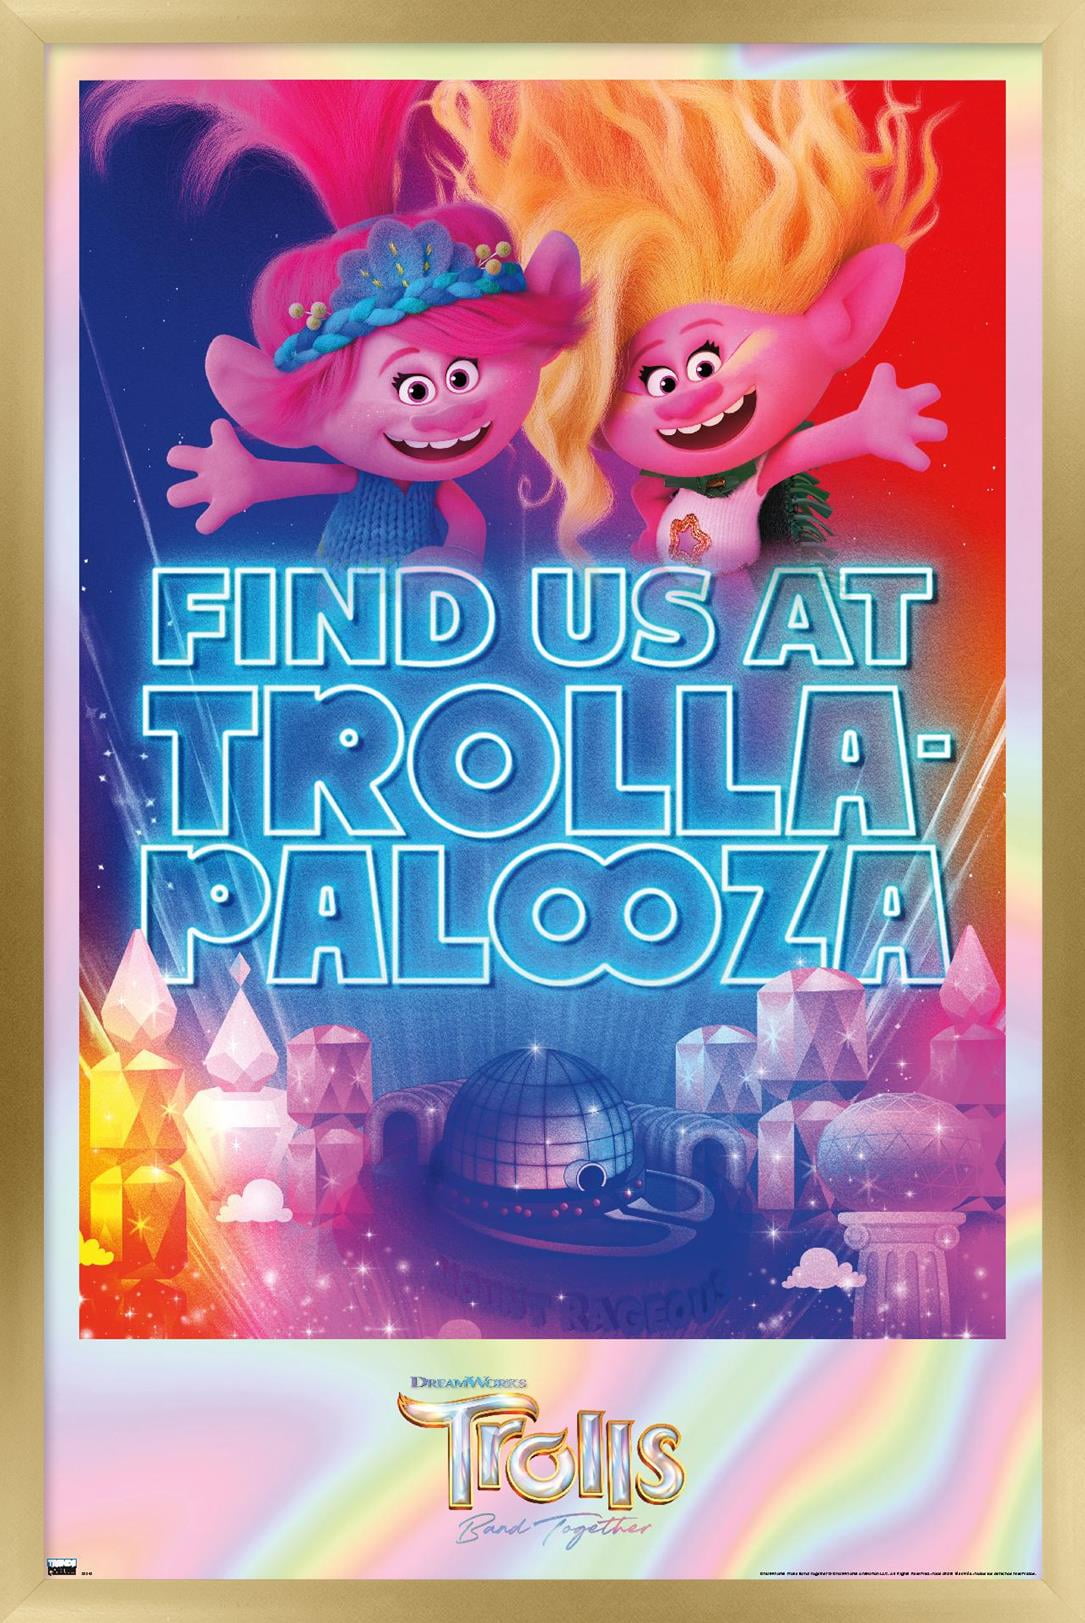 DreamWorks Trolls 2 - Poppy Wall Poster, 22.375 x 34 